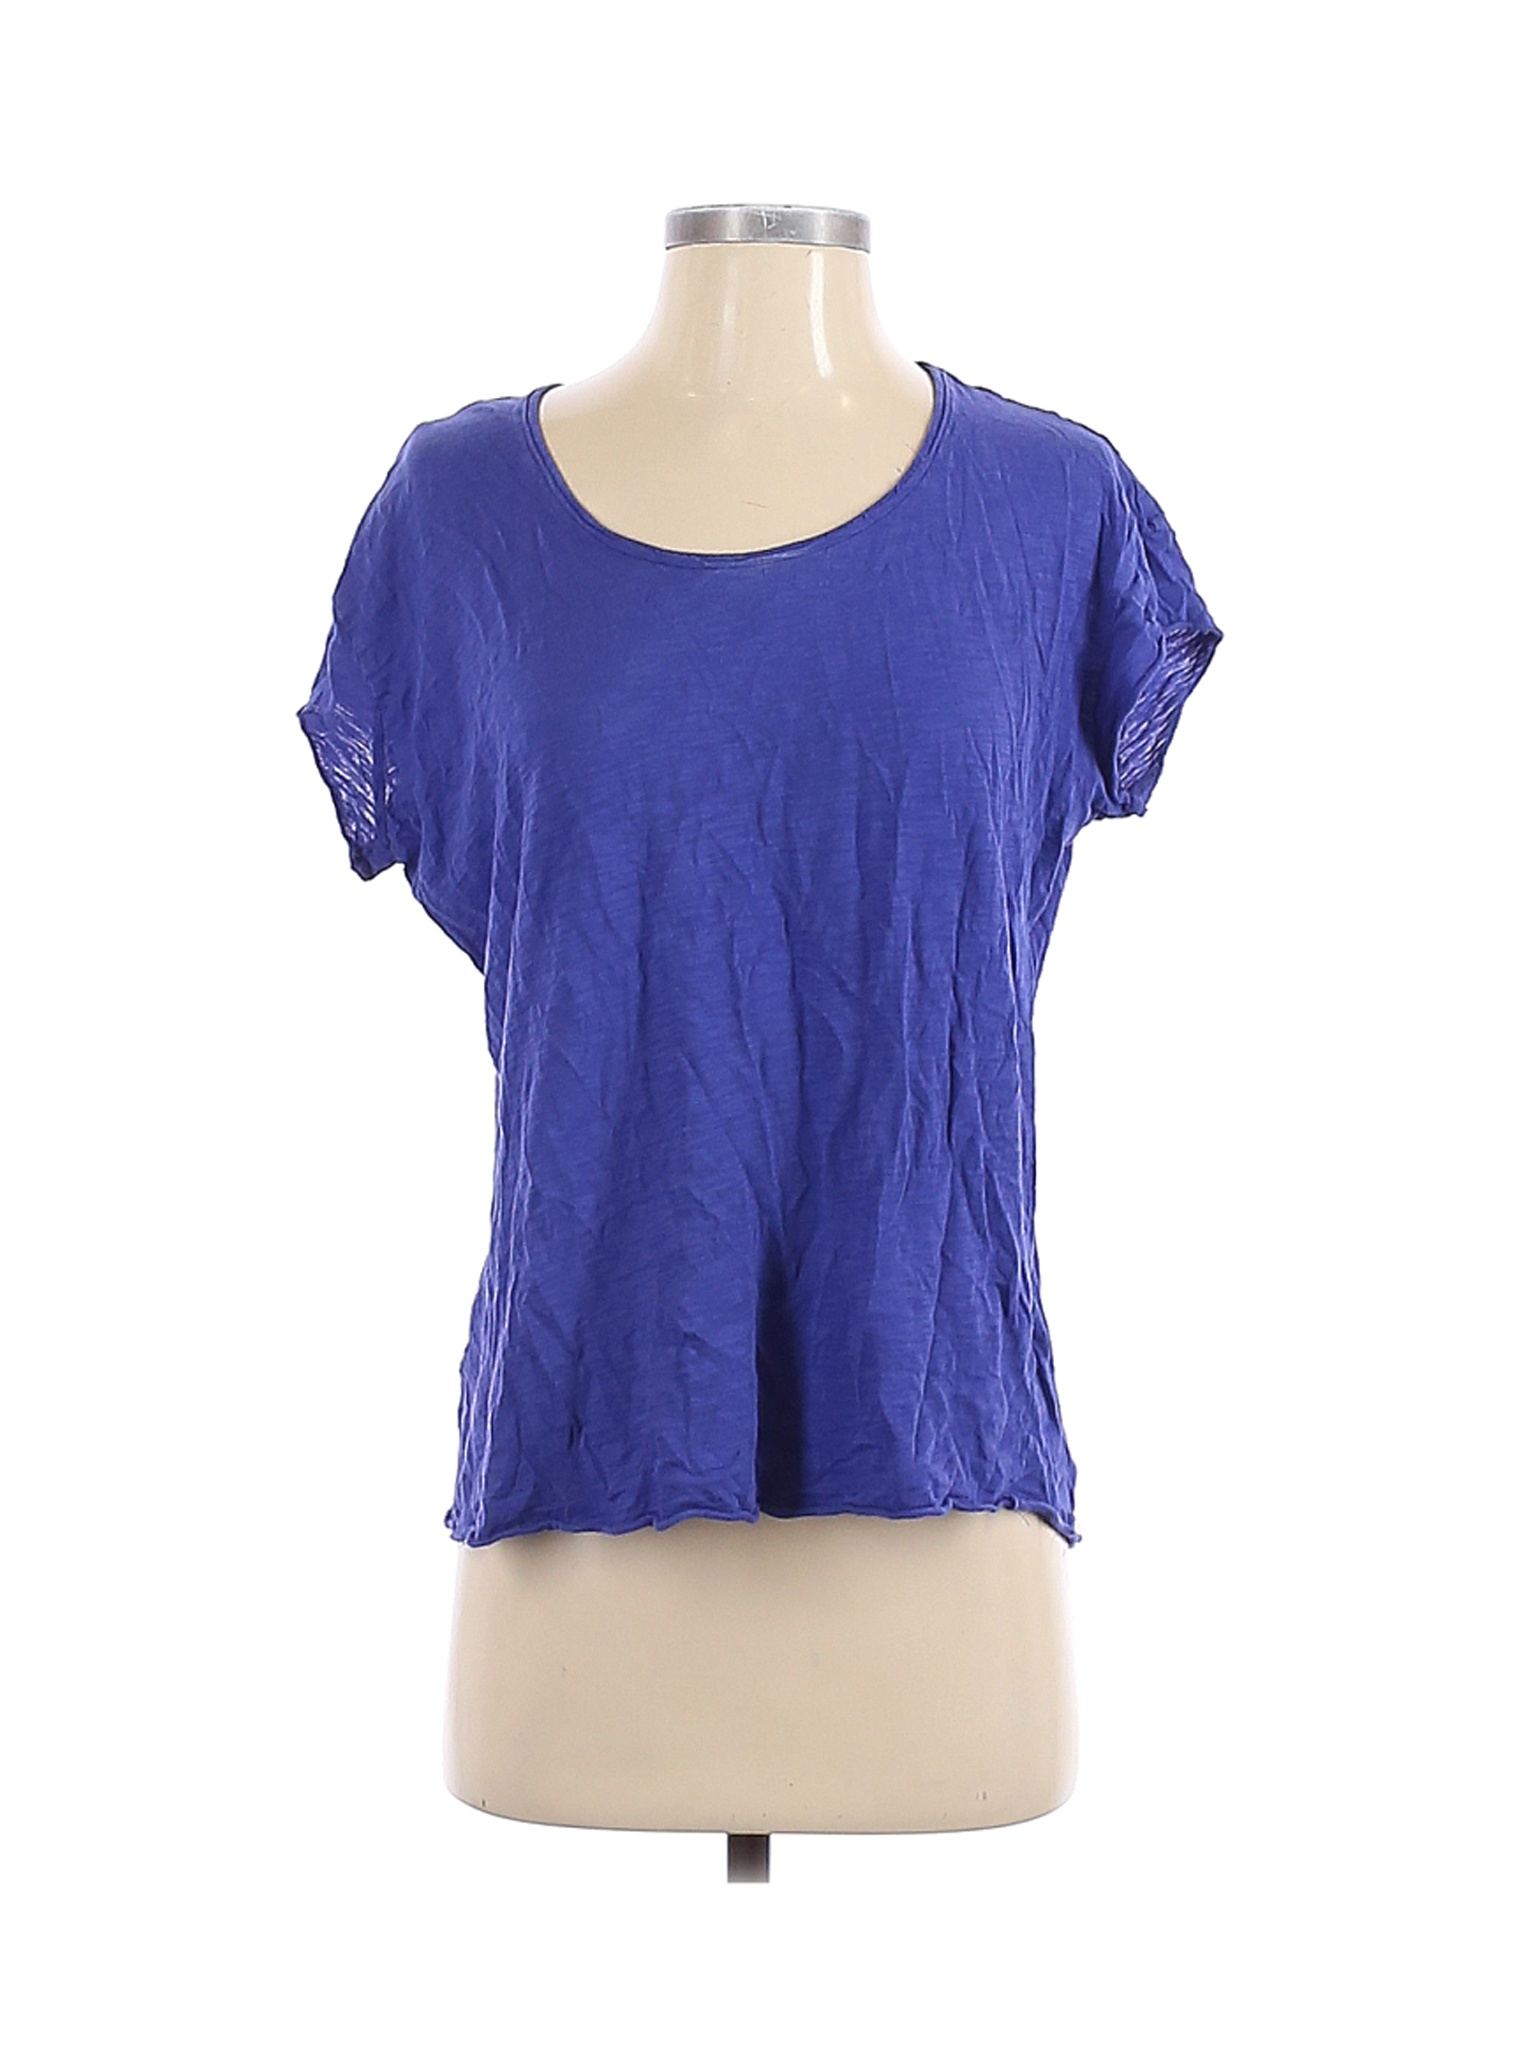 Mango Women Blue Short Sleeve T-Shirt S | eBay